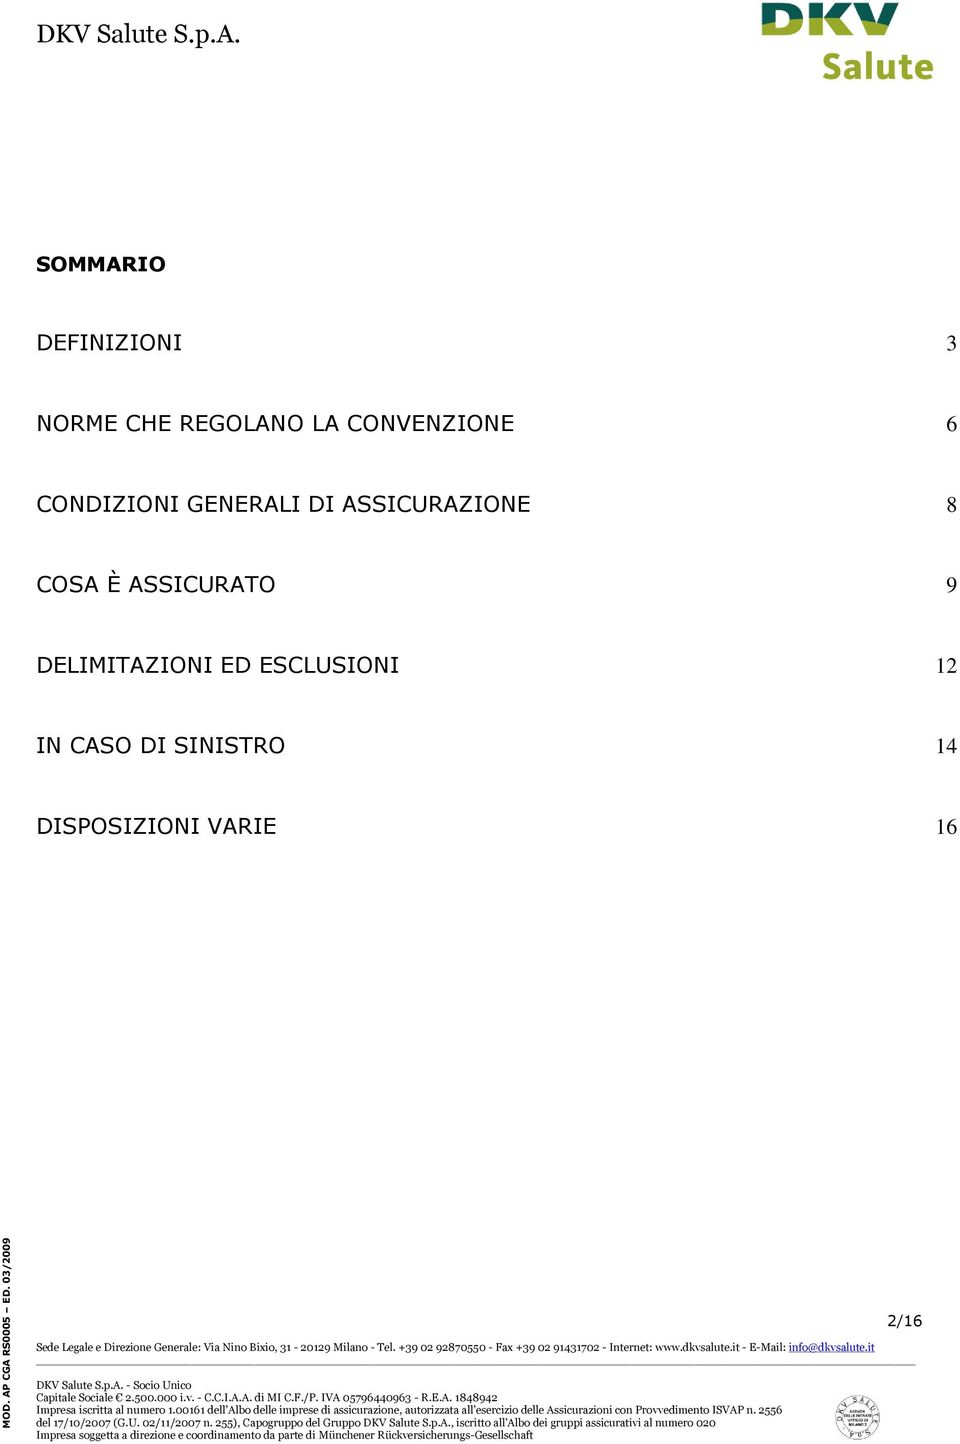 SINISTRO 14 DISPOSIZIONI VARIE 16 - Socio Unico del 17/10/2007 (G.U. 02/11/2007 n.